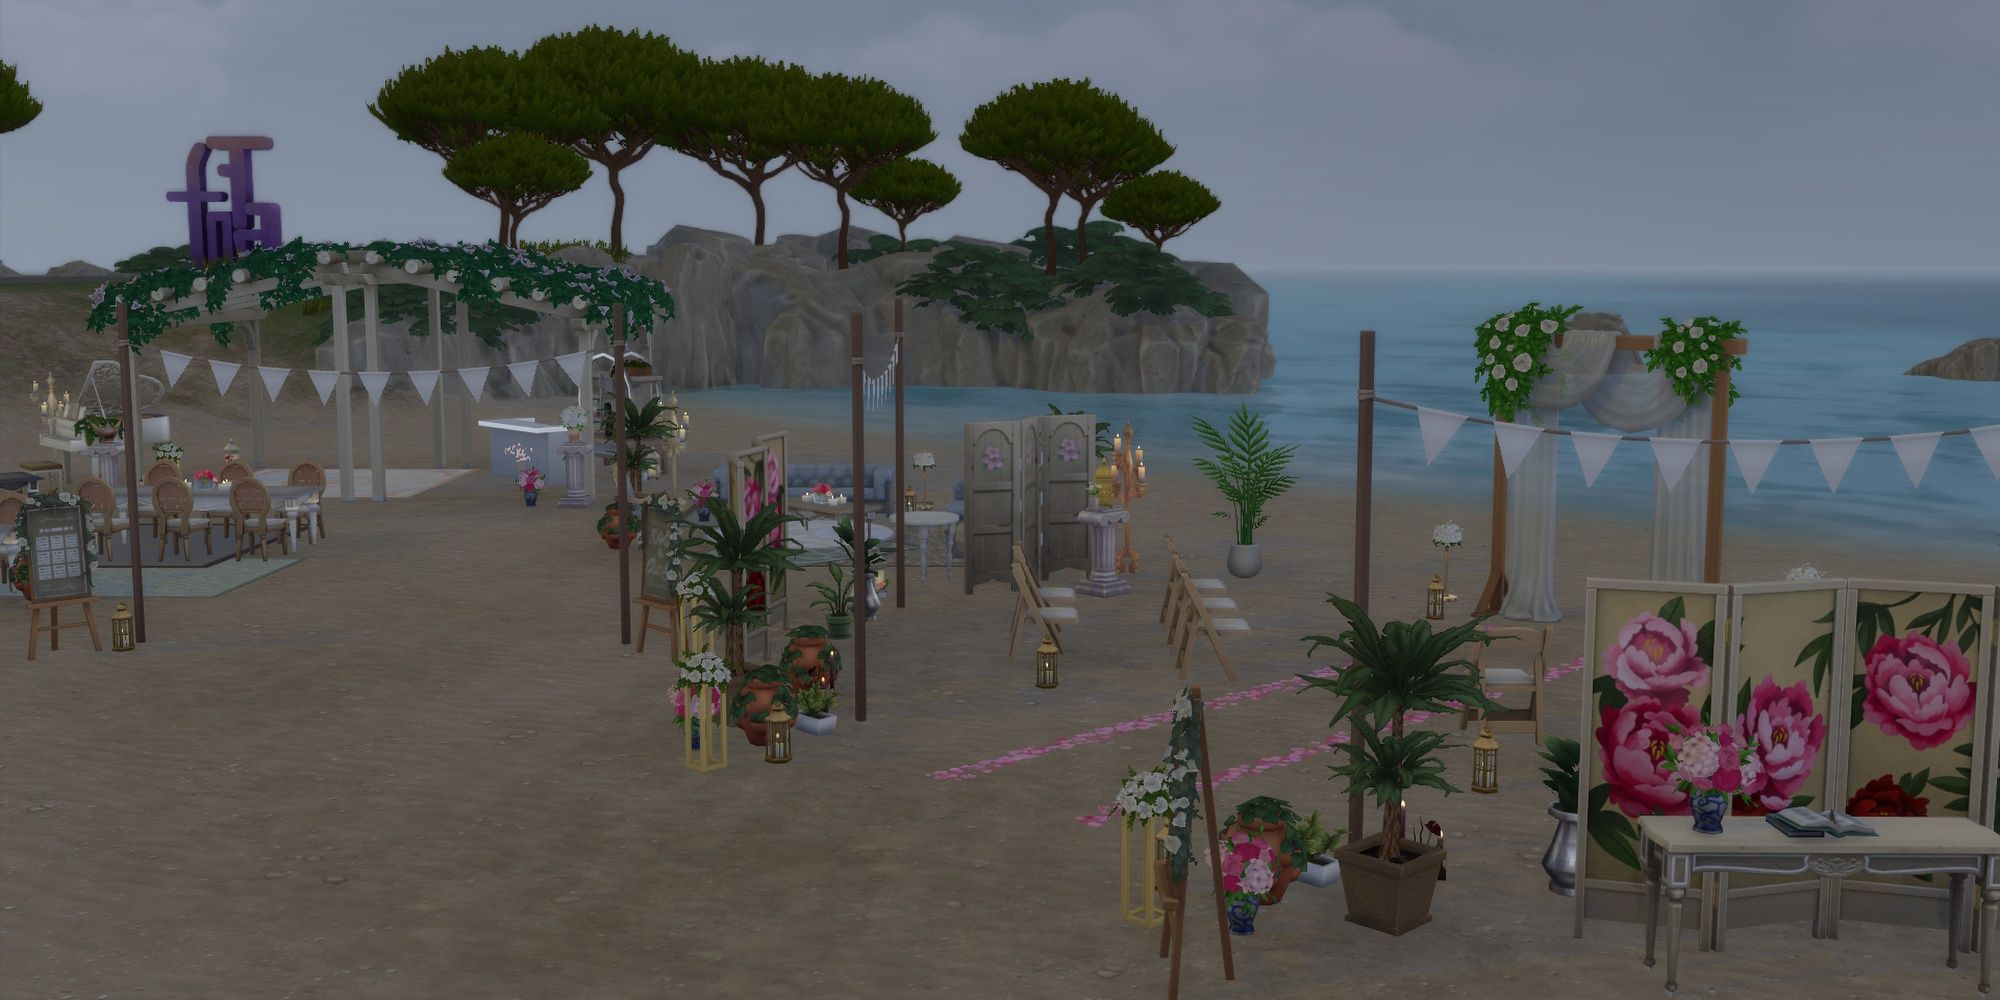 A quaint wedding venue on the beach in The Sims 4